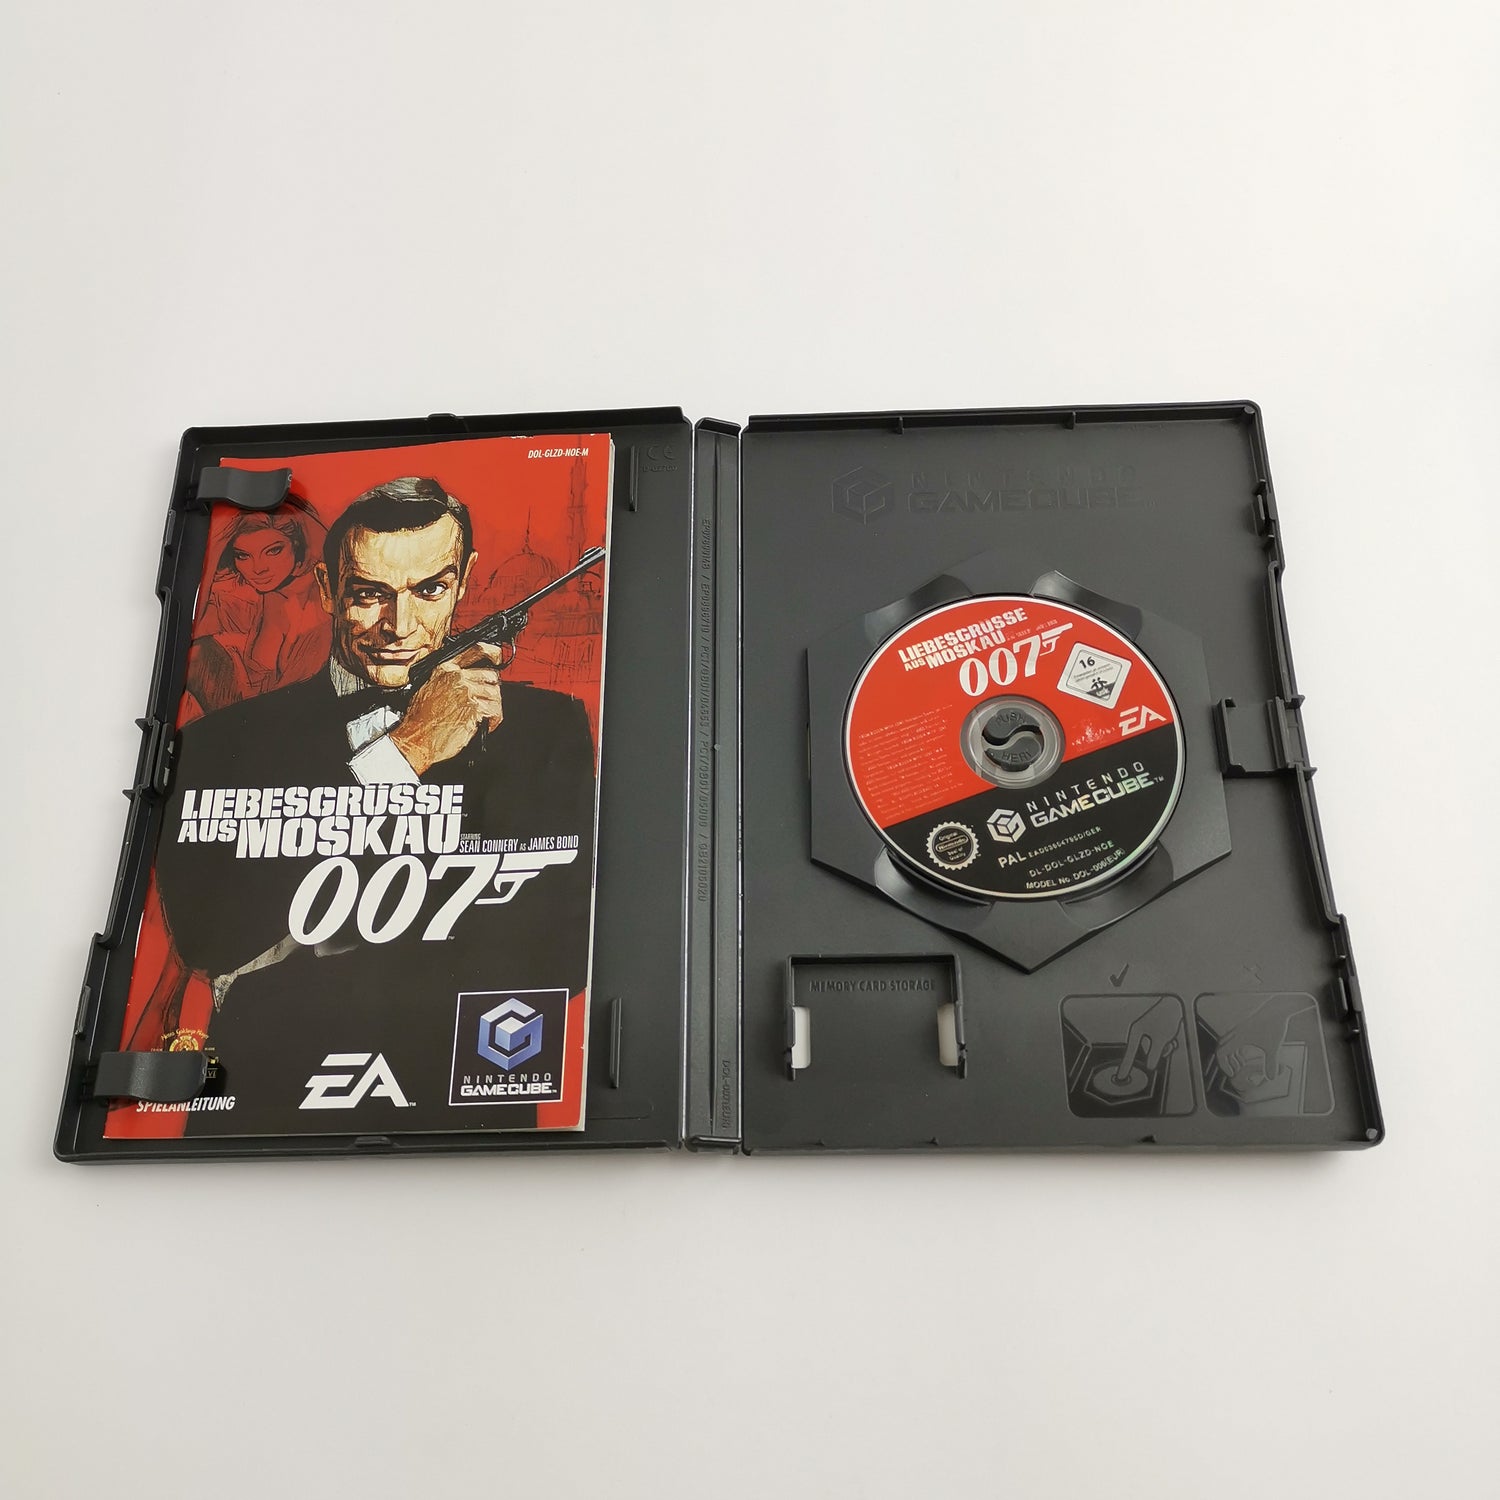 Nintendo Gamecube Spiel : Liebesgrüsse aus Moskau 007 - James Bond | dt. PAL OVP